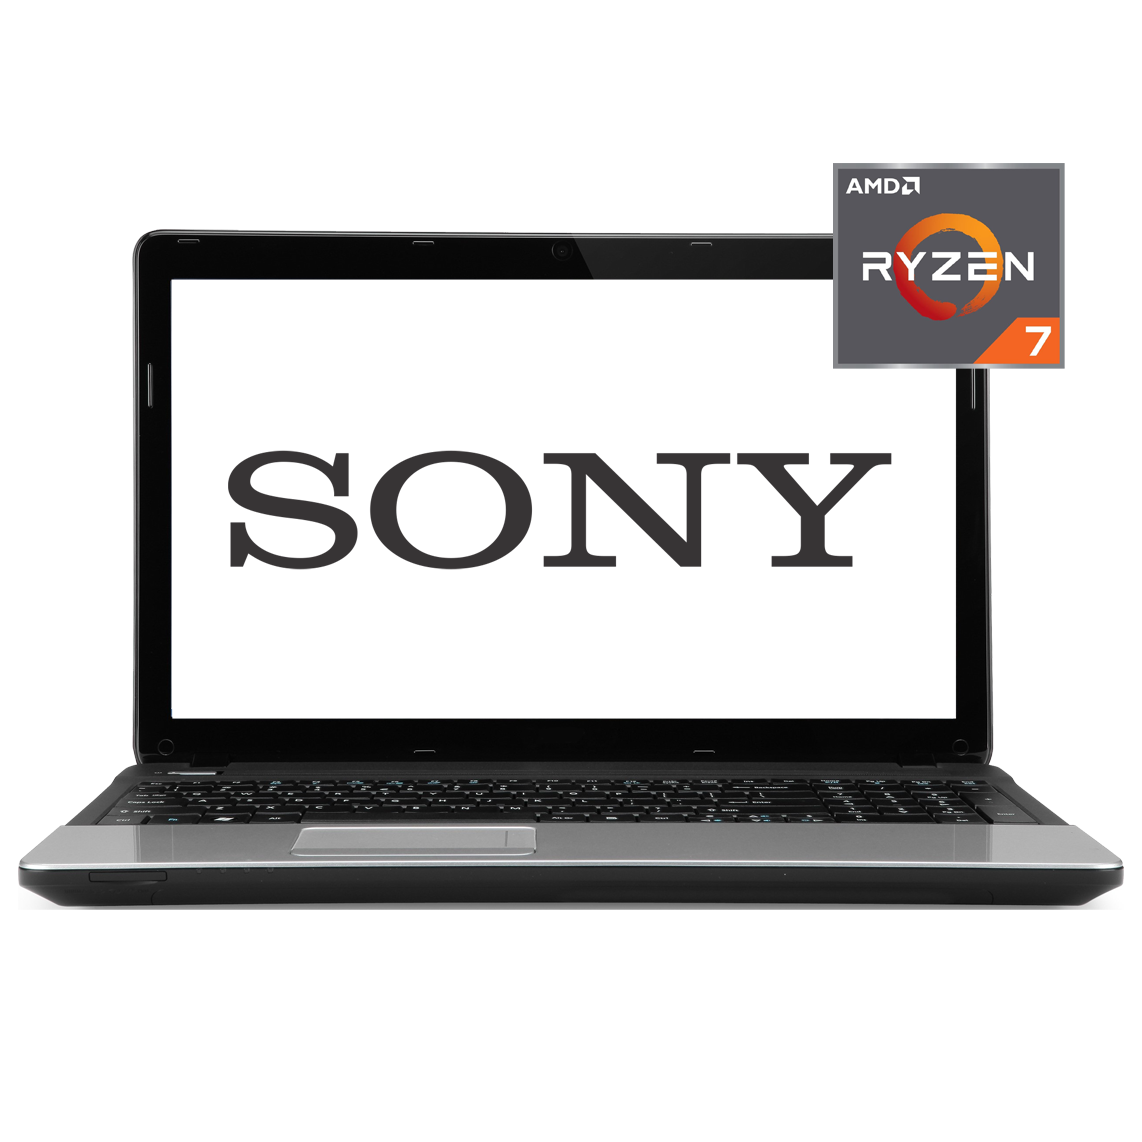 Sony - 17.3 inch AMD Ryzen 7